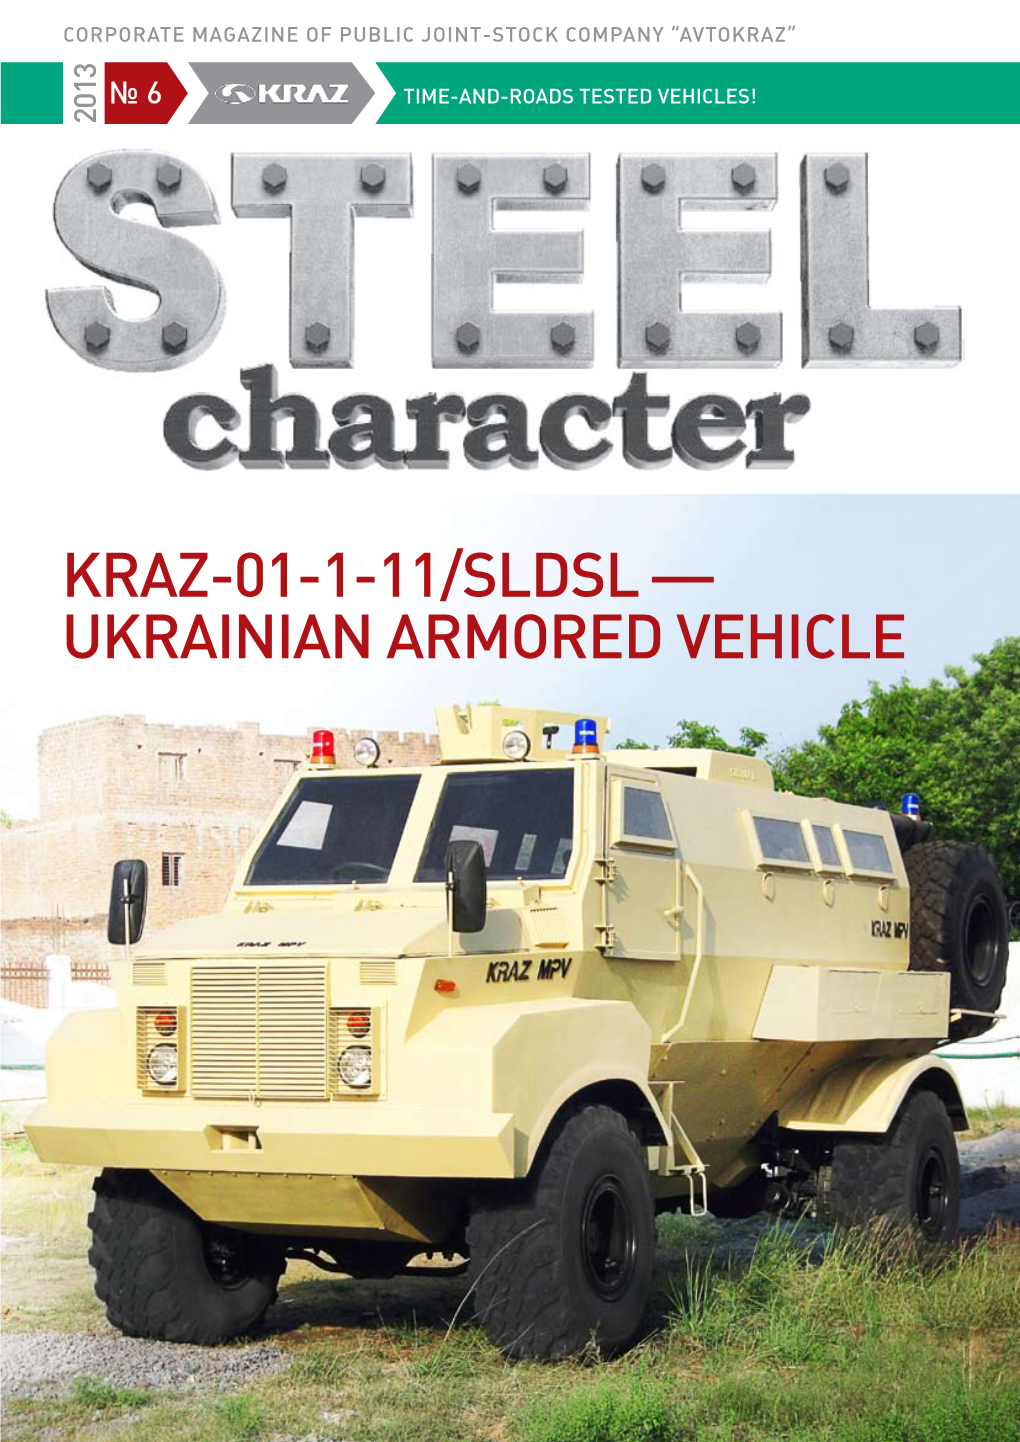 KRAZ-01-1-11/Sldsl — UKRAINIAN Armored Vehicle